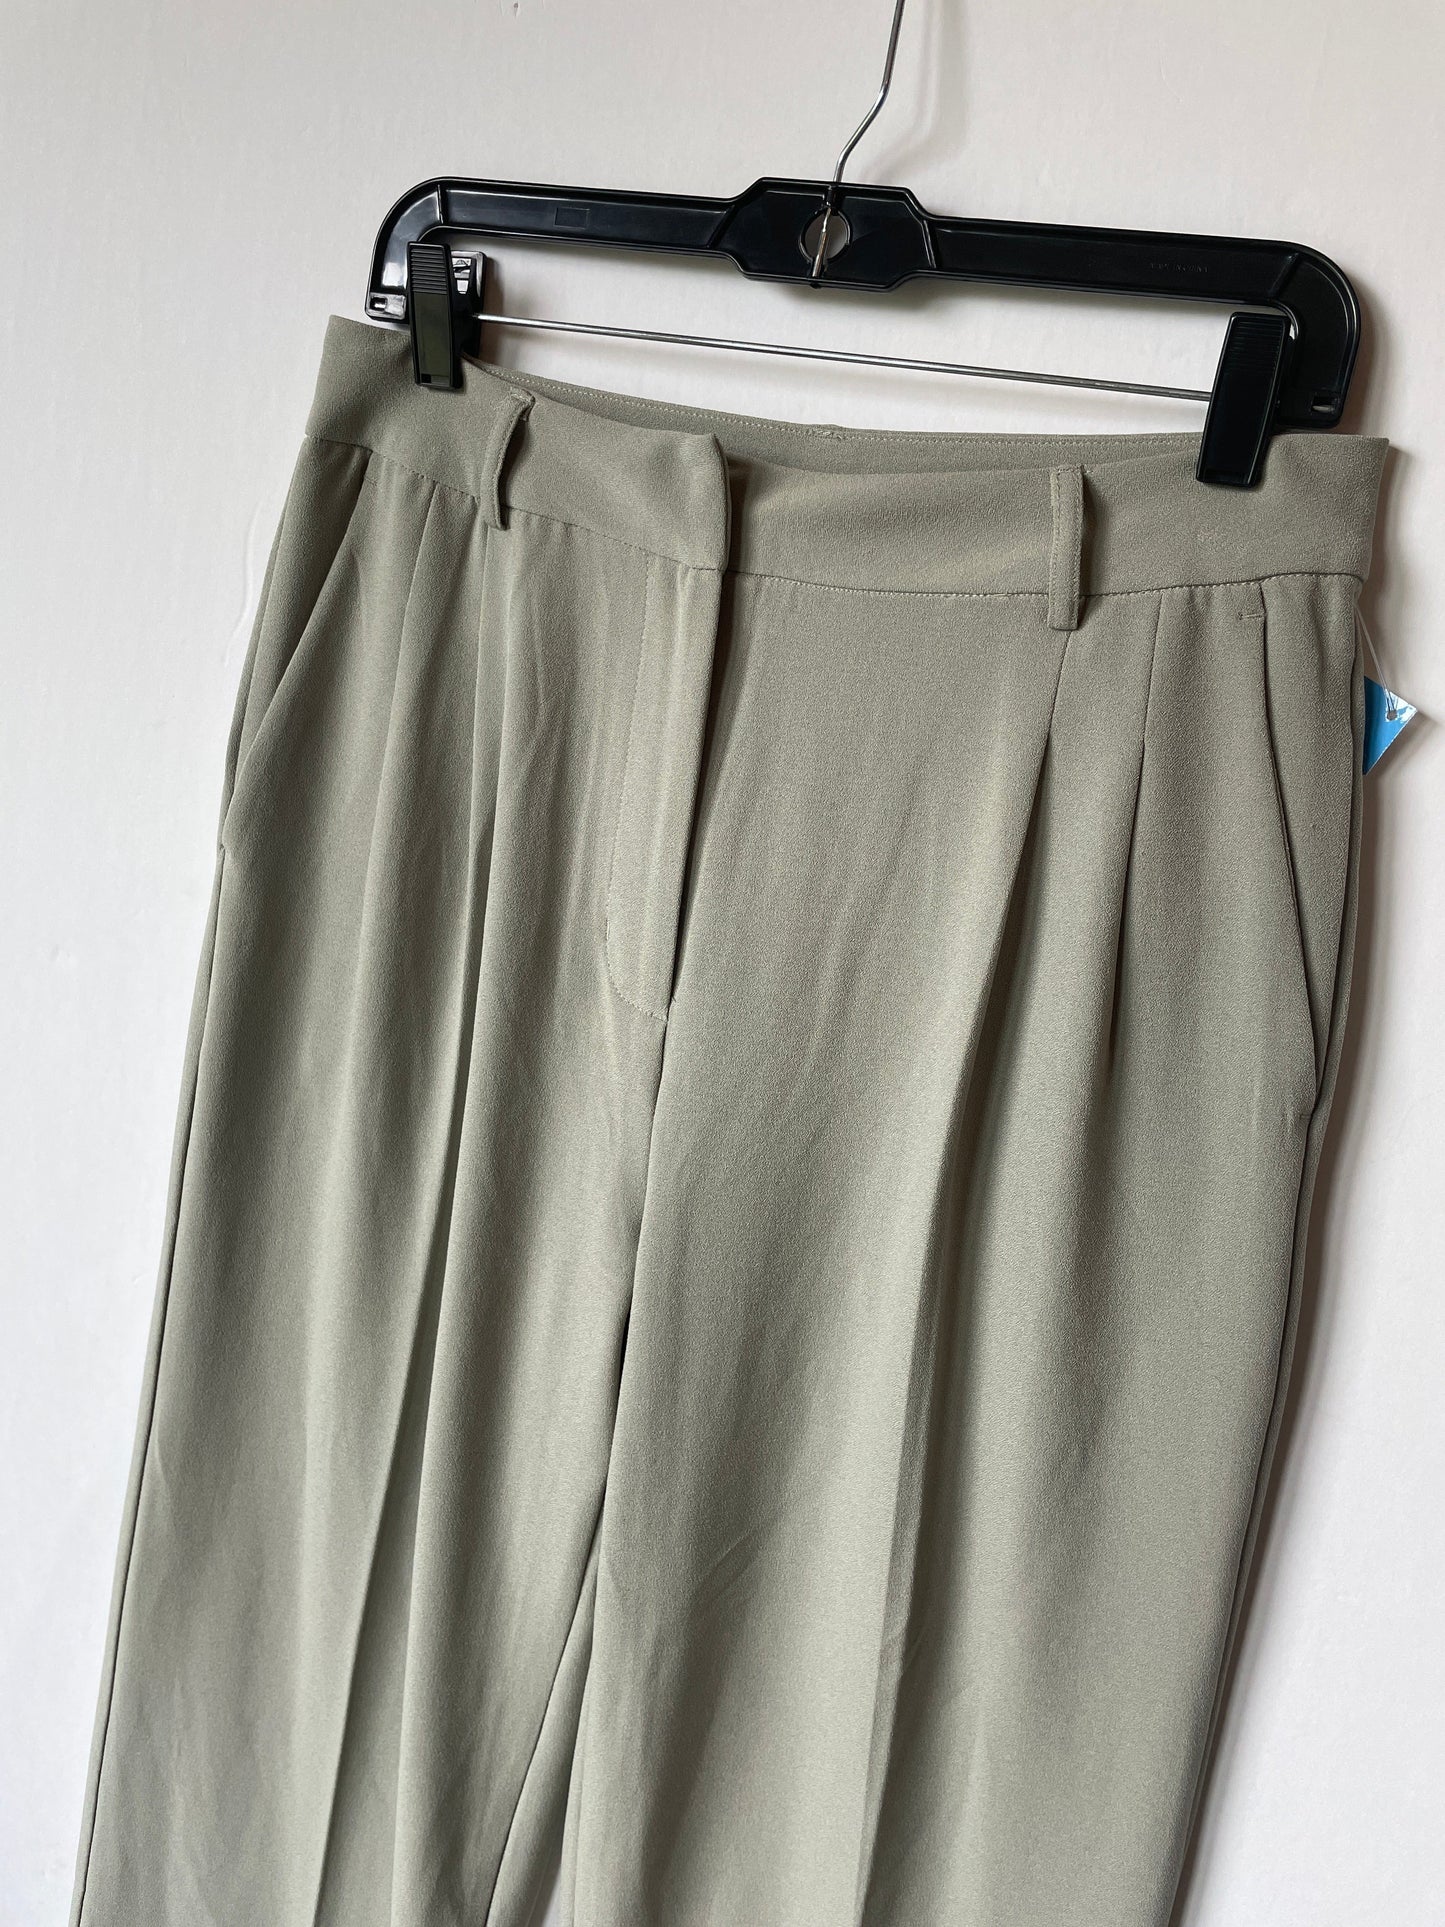 Pants Work/dress By Shinestar  Size: 4